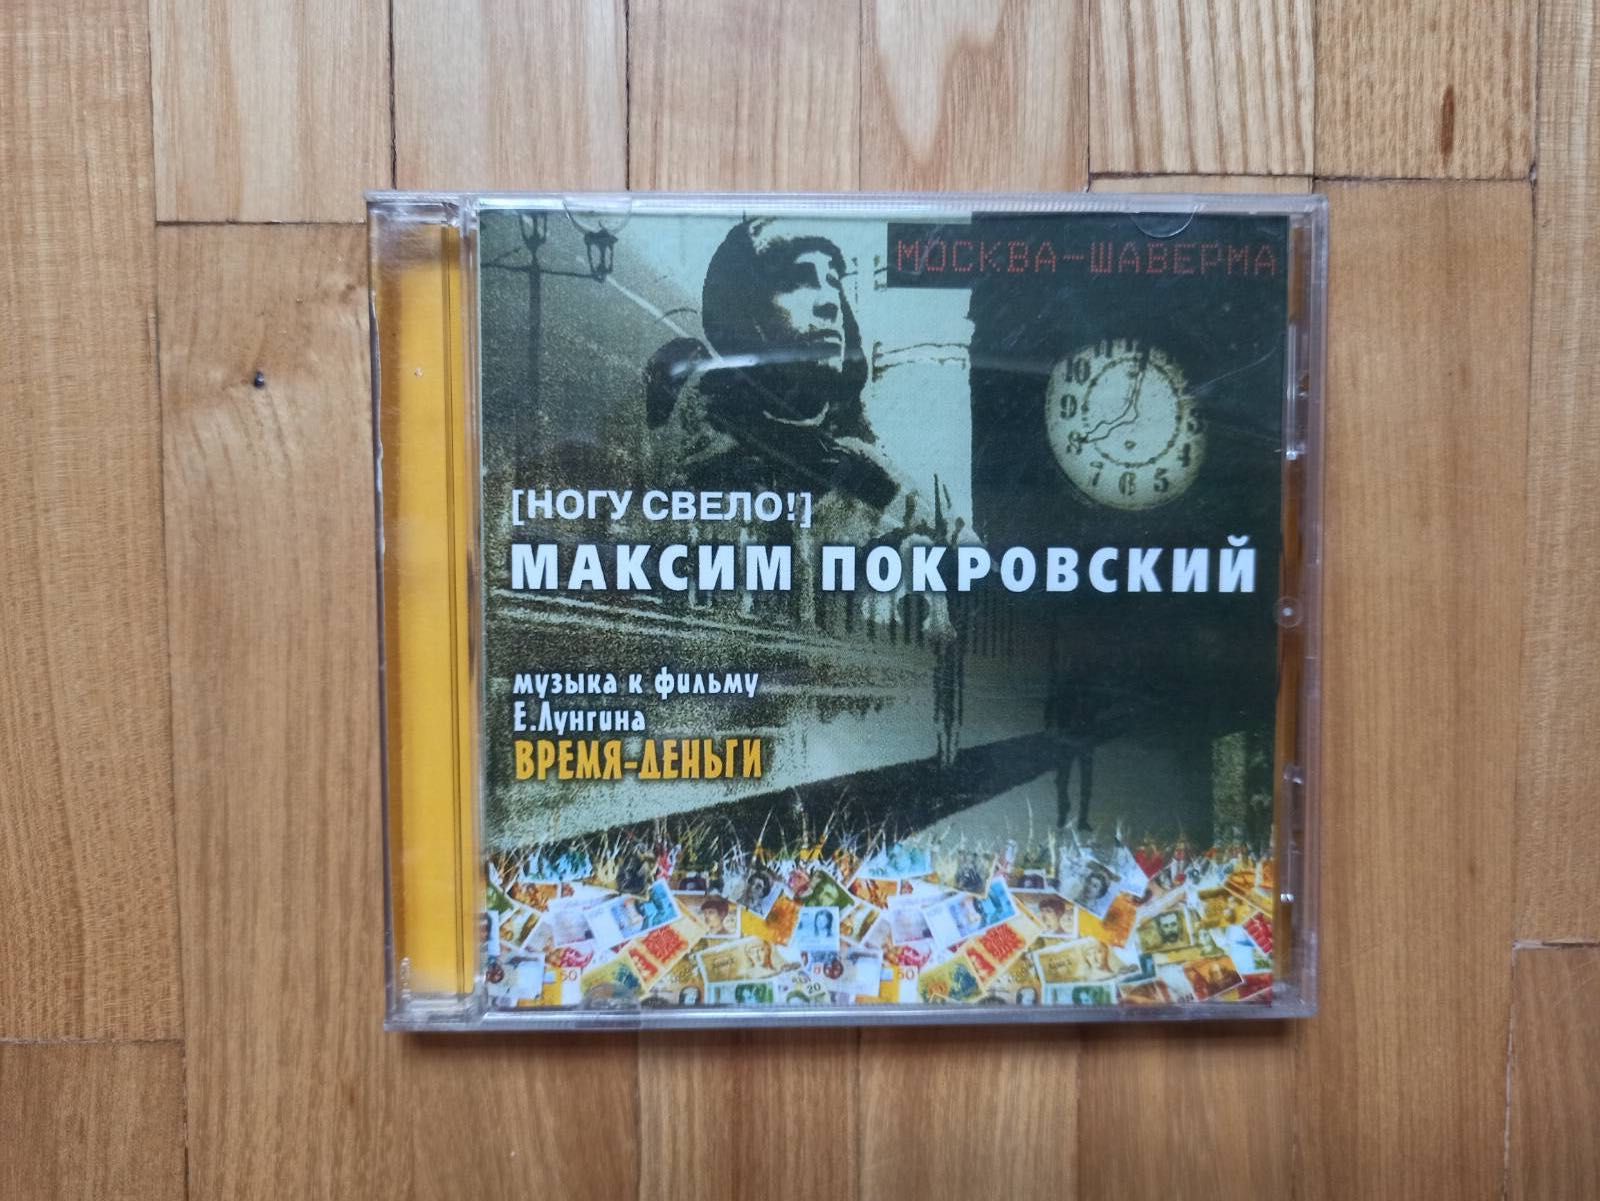 Ногу Свело Максим Покровский СД CD диски